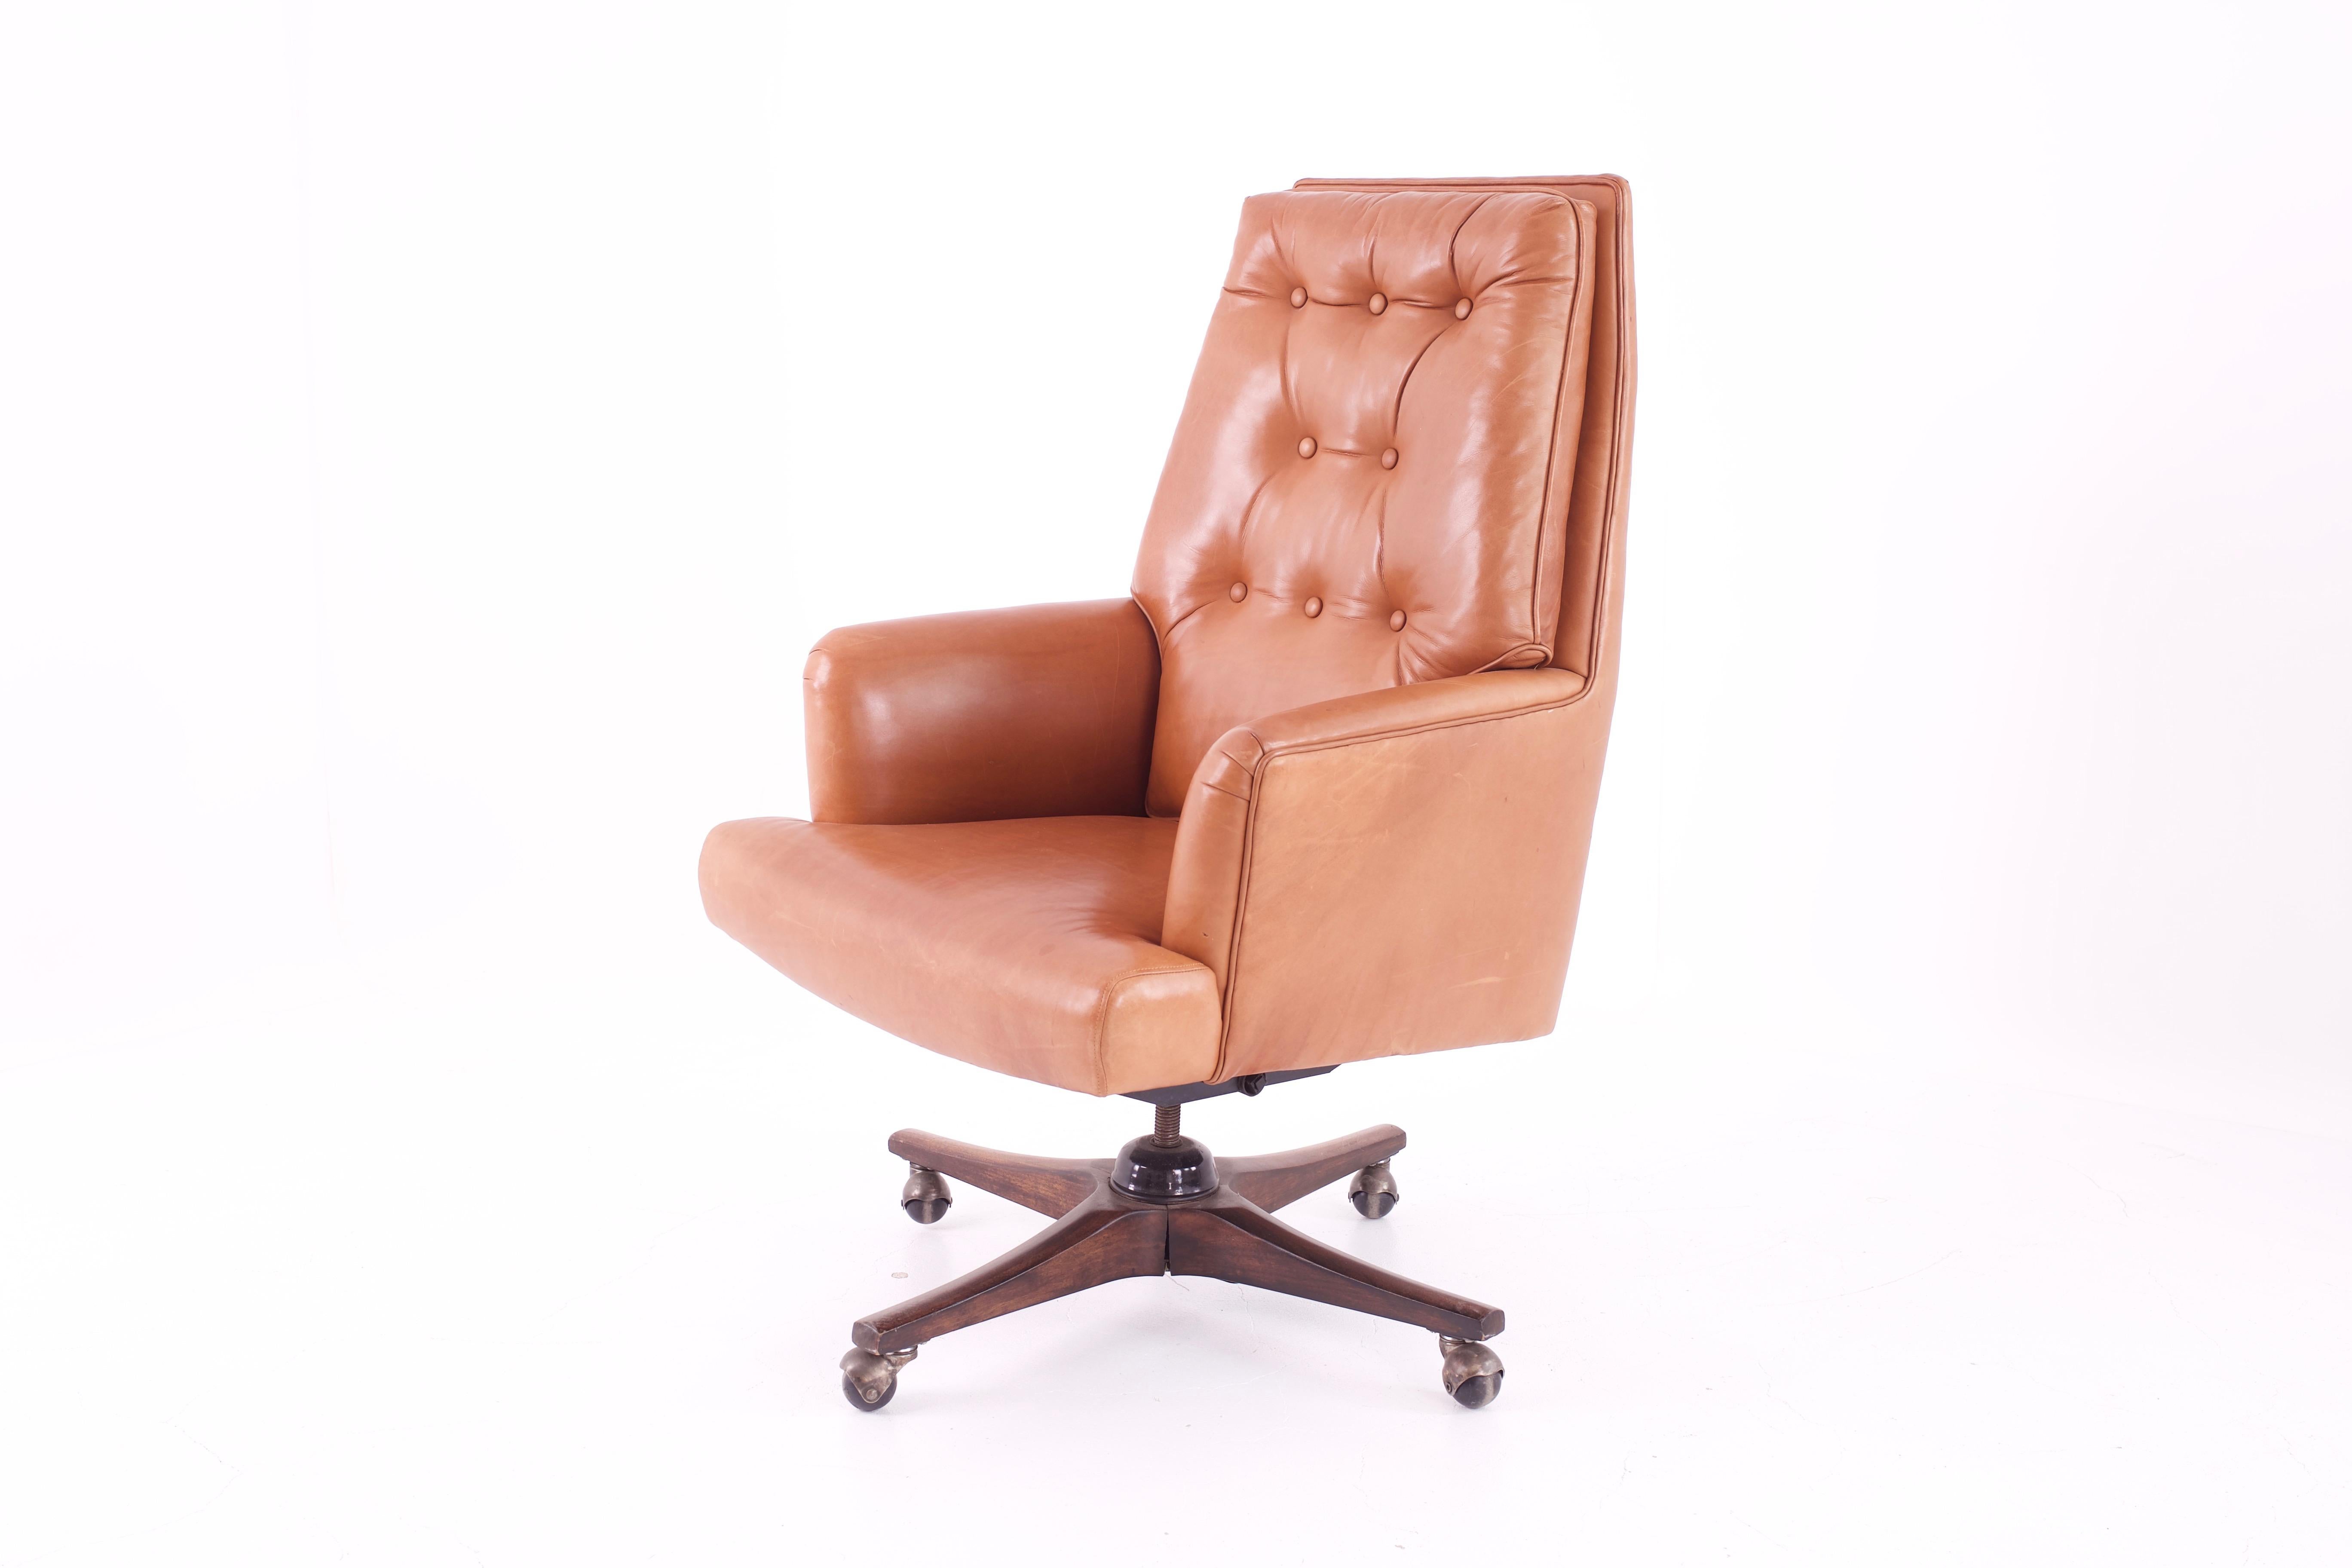 Late 20th Century Edward Wormley for Dunbar Style Mid Century Leather Orange Desk Chair